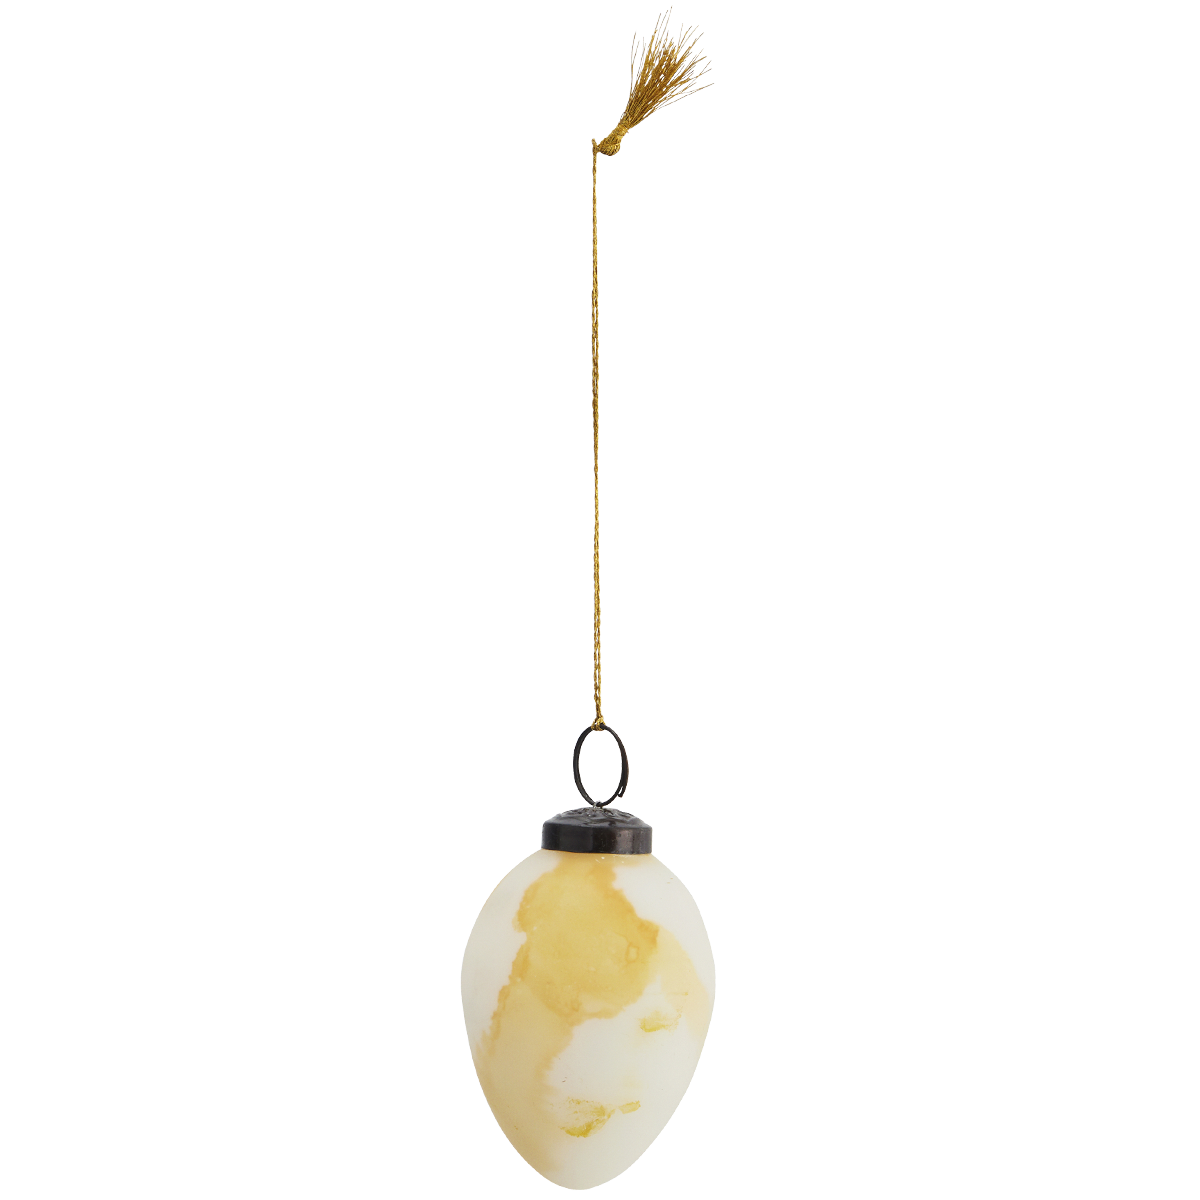 Hanging glass egg